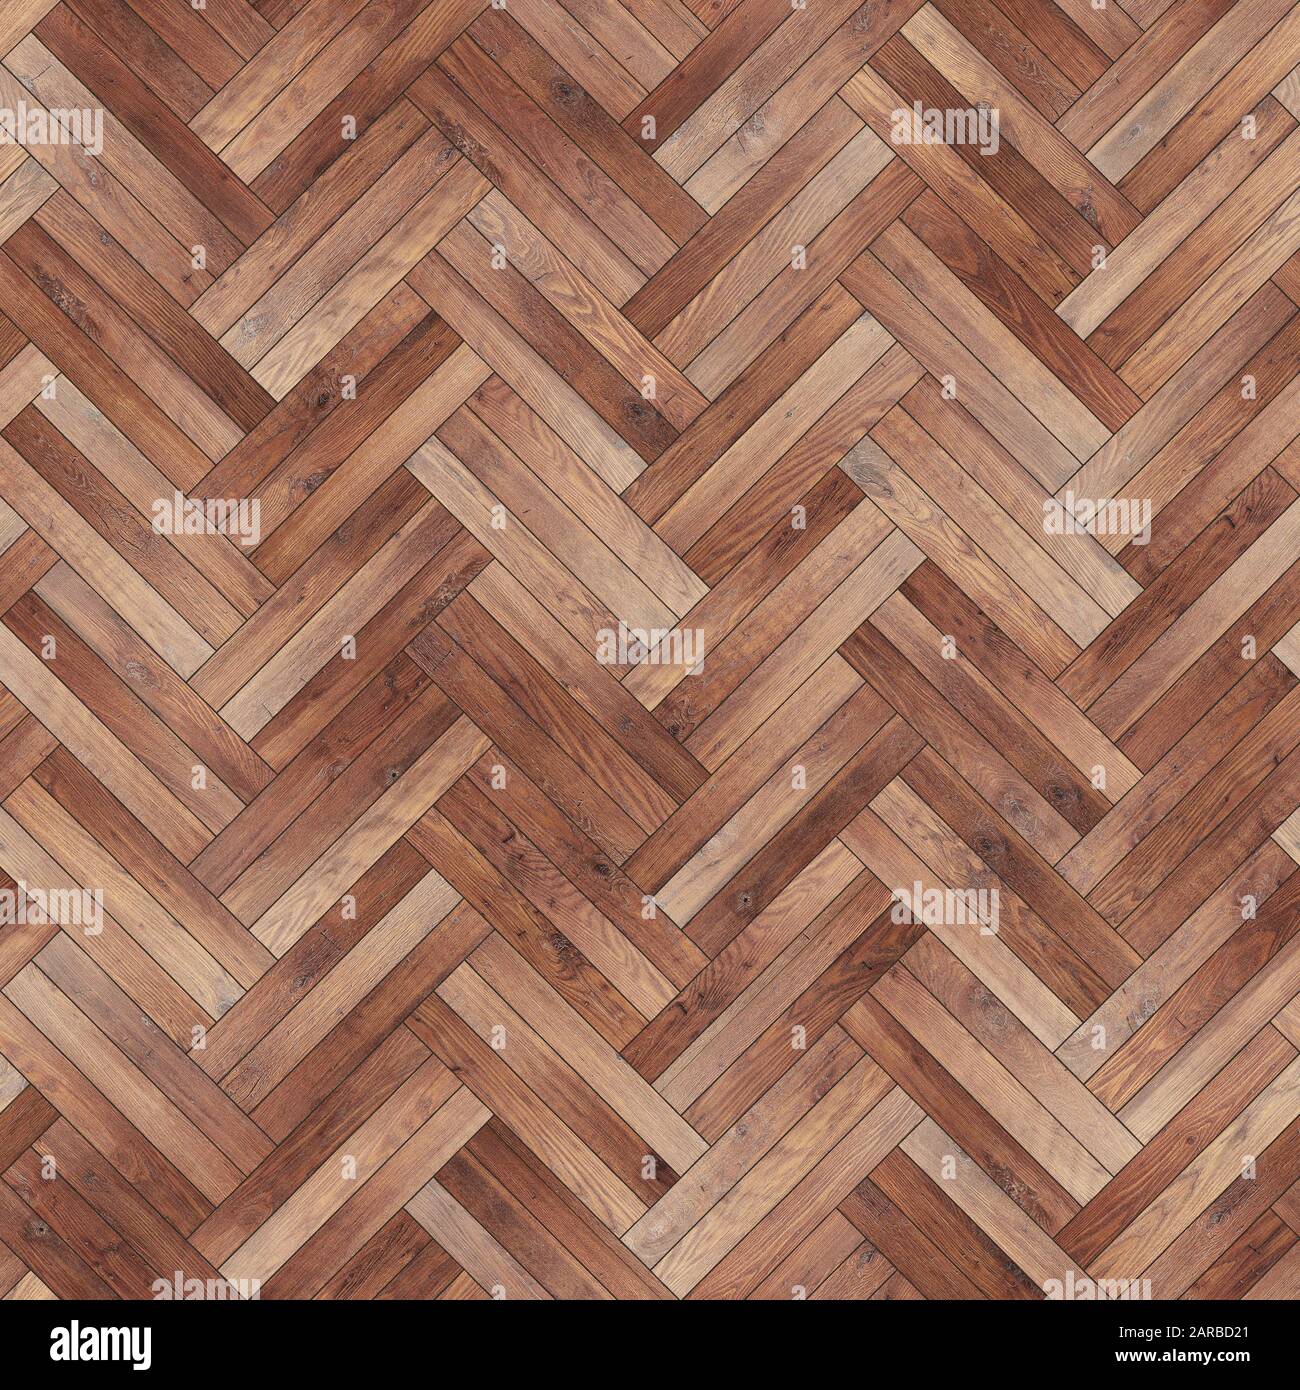 Seamless Wood Parquet Texture Herringbone Brown Stock Photo Alamy